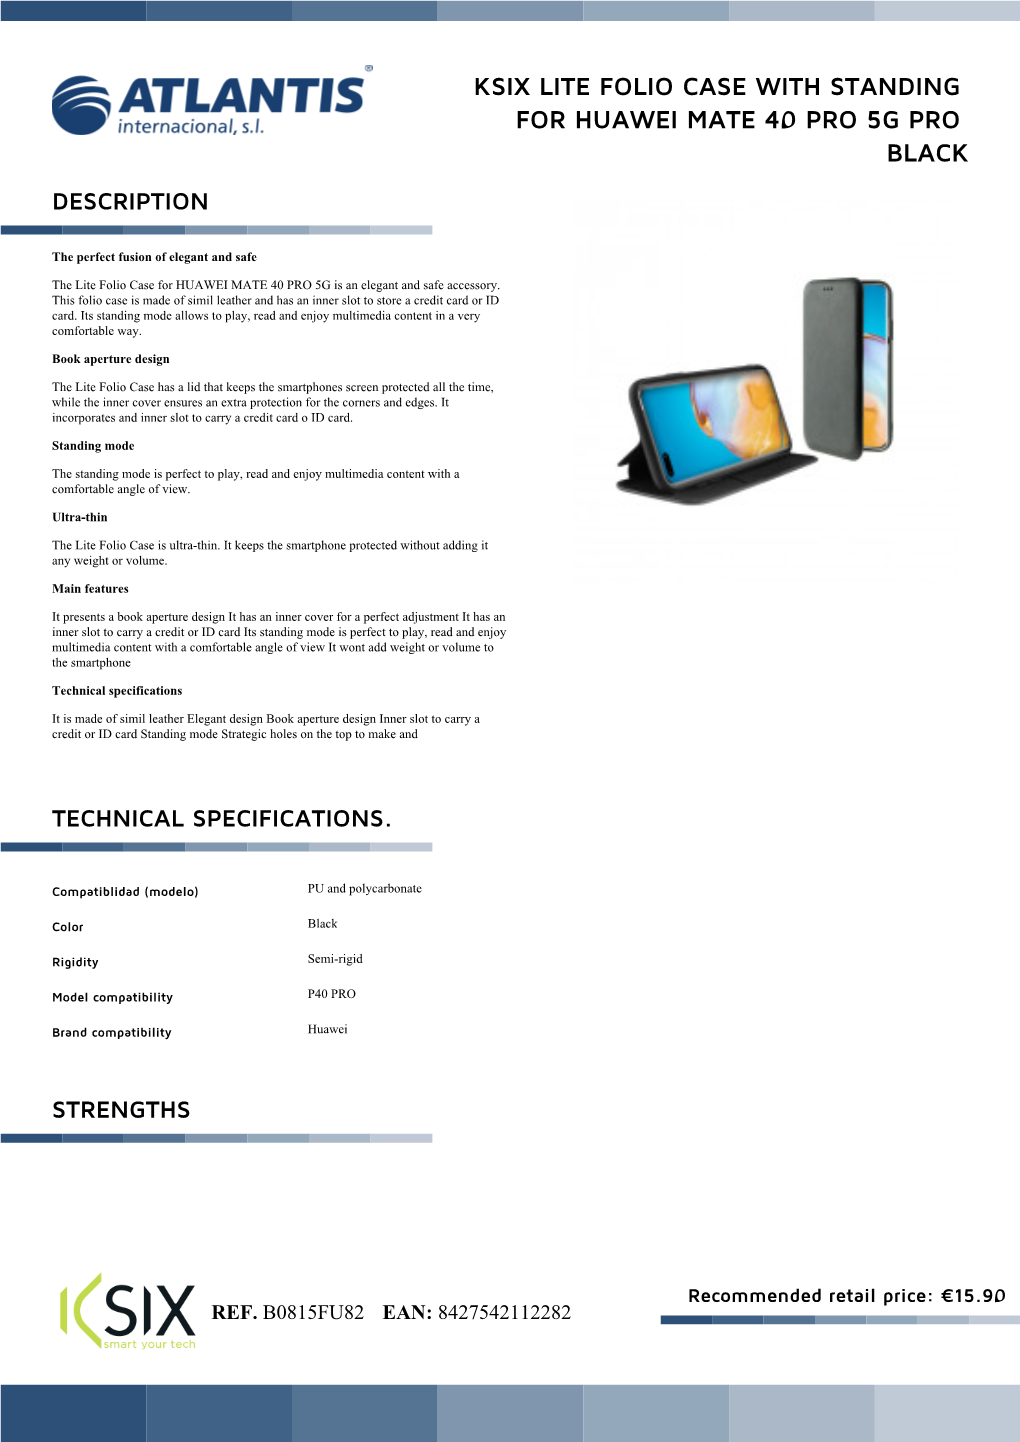 Ksix Lite Folio Case with Standing for Huawei Mate 40 Pro 5G Pro Black Description